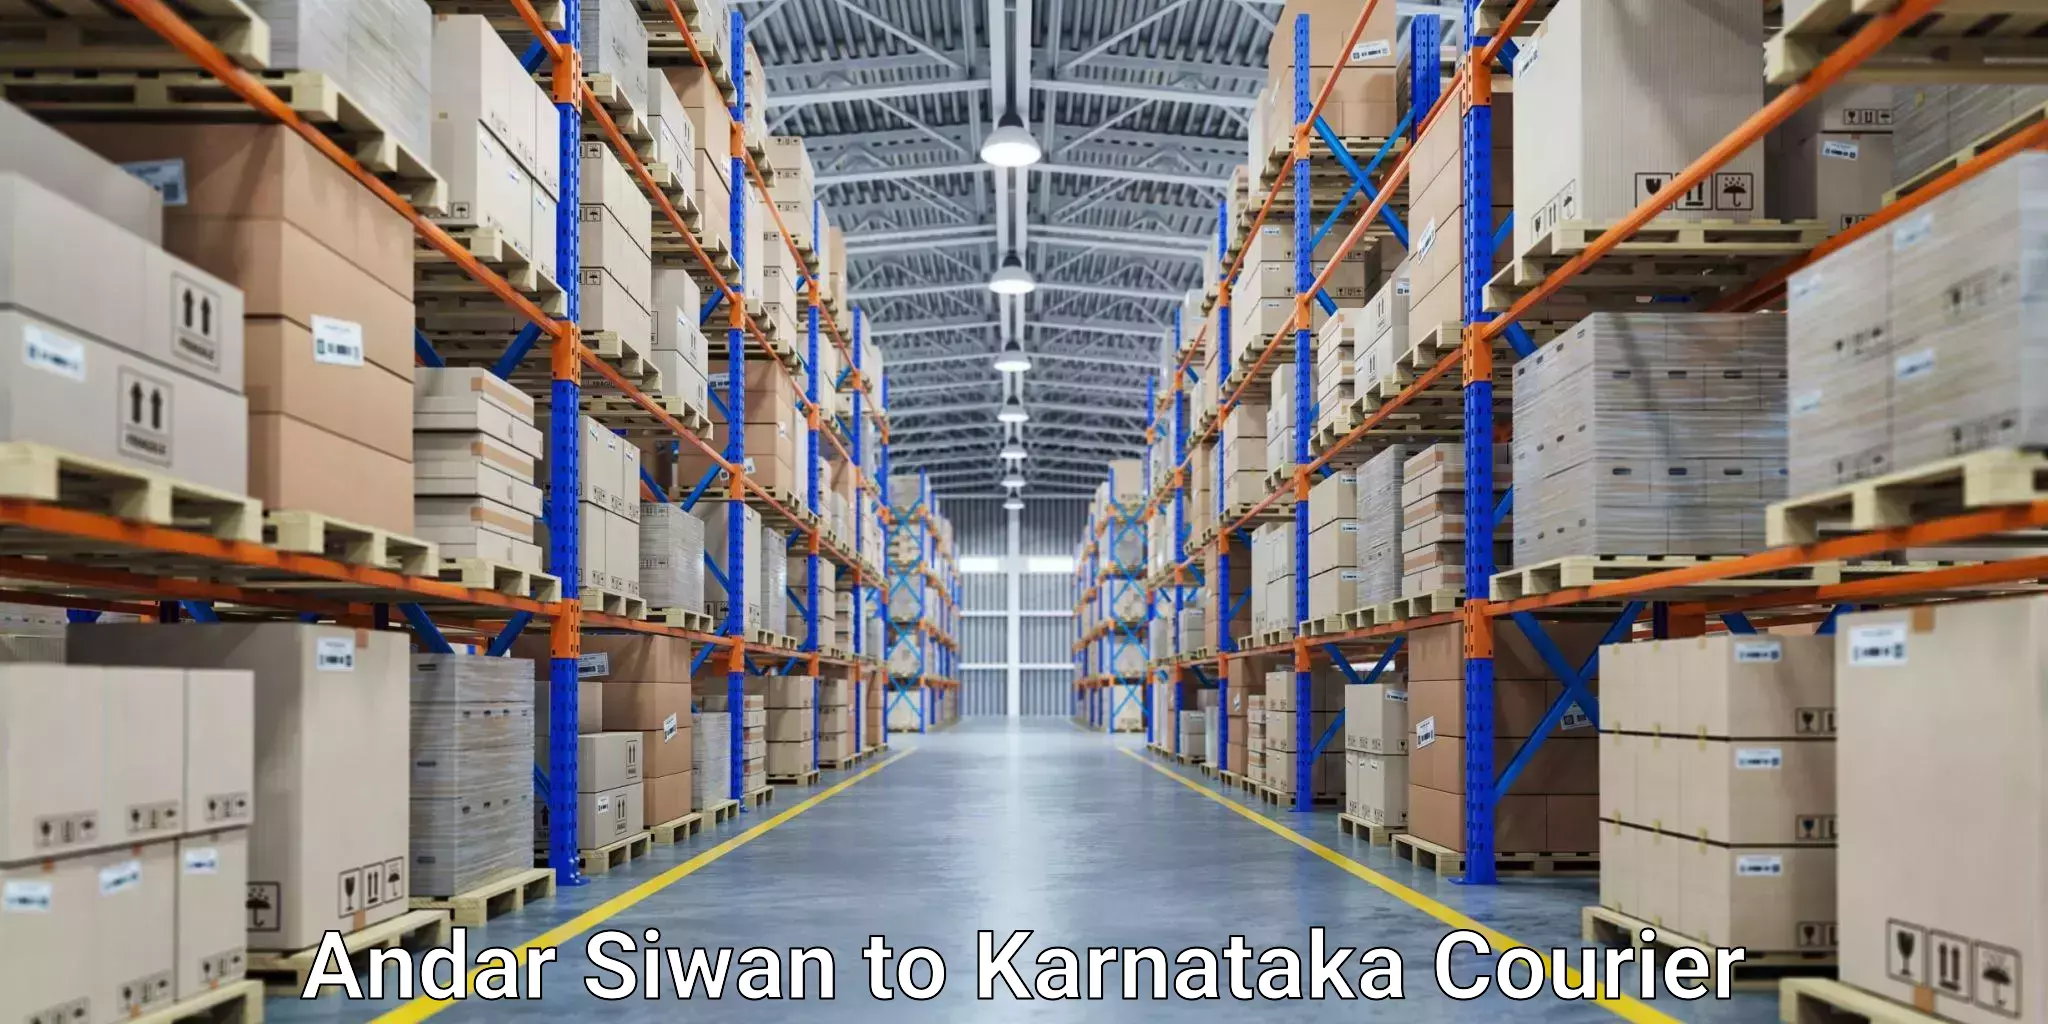 Courier service innovation Andar Siwan to Karnataka